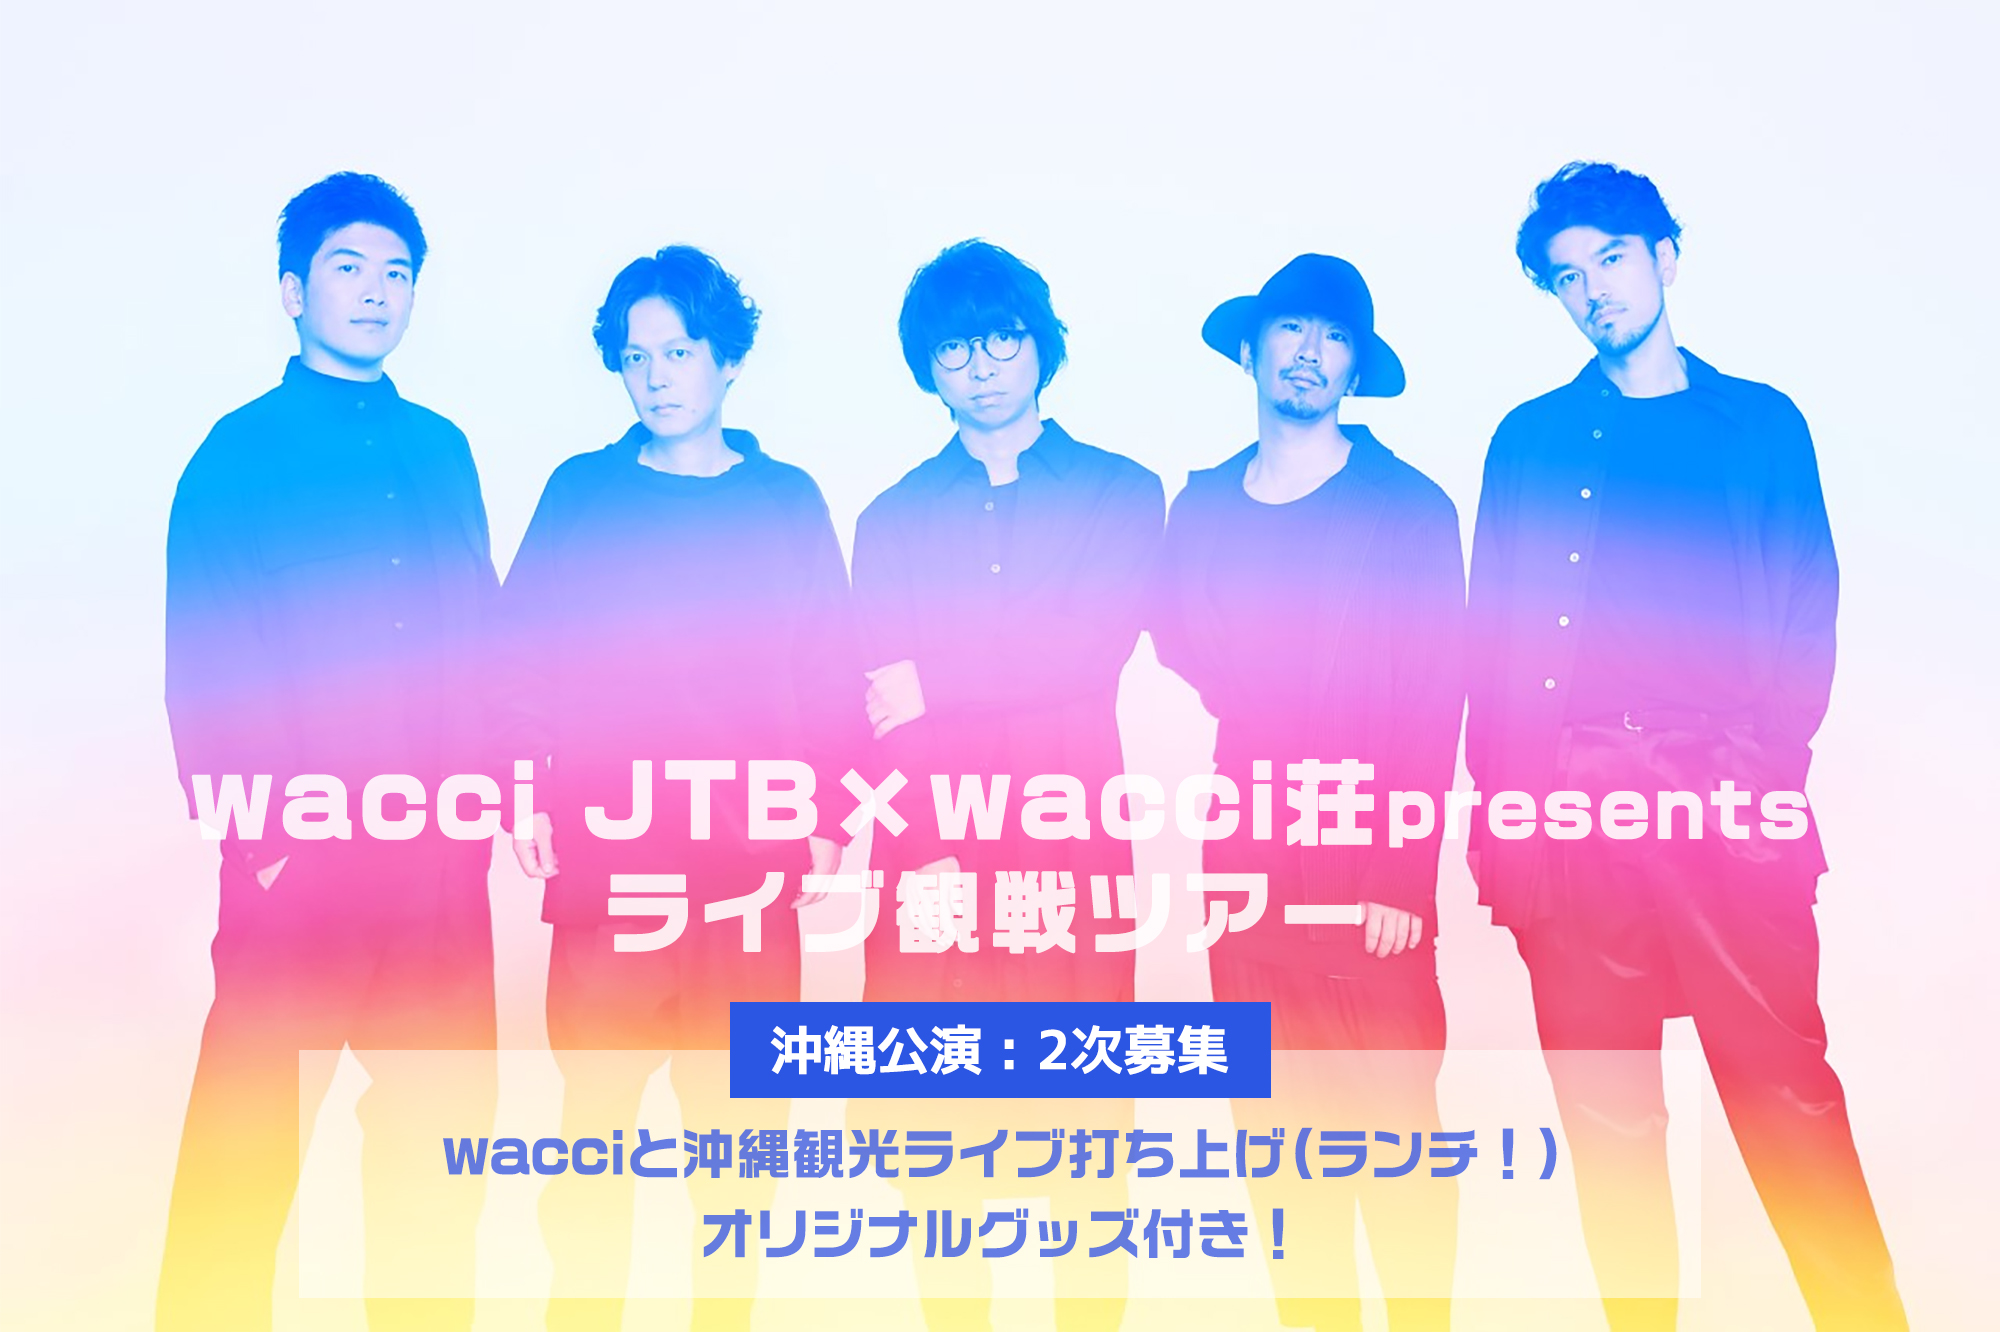 wacci JTB×wacci荘presents ライブ観戦ツアー ライブチケット付き<